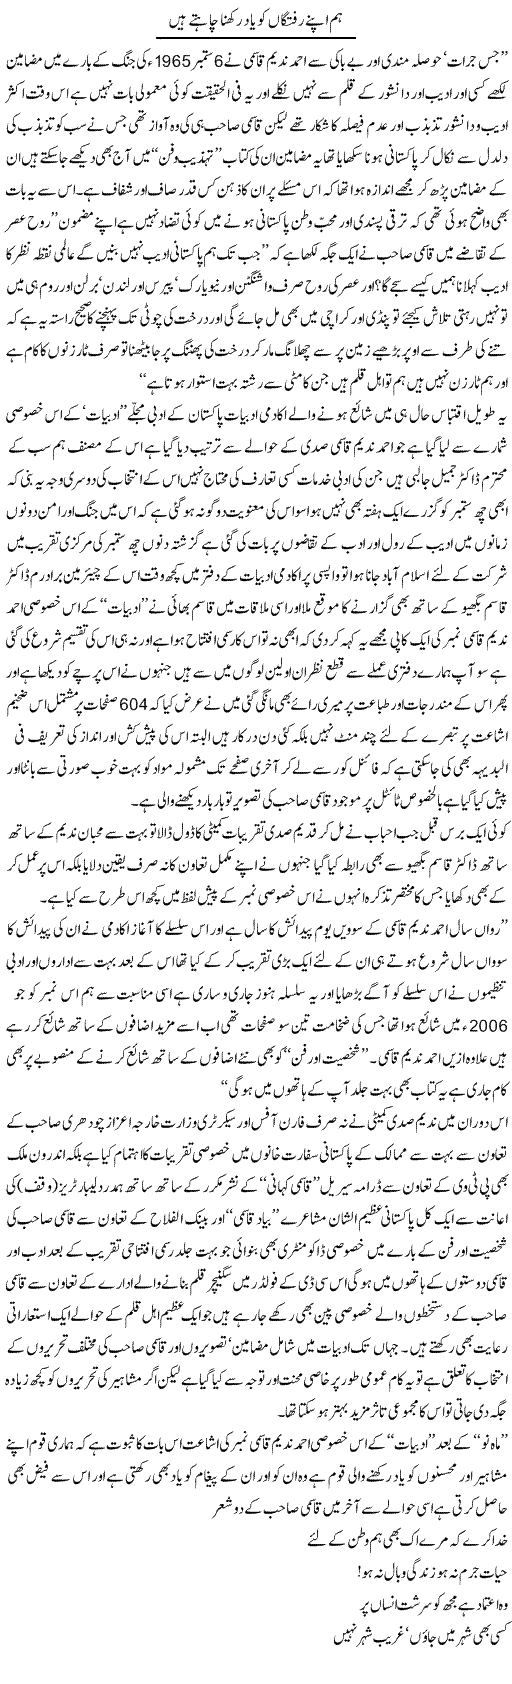 Hum Apne Raftagan Ko Yaad Rakhna Chahtay Hain | Amjad Islam Amjad | Daily Urdu Columns